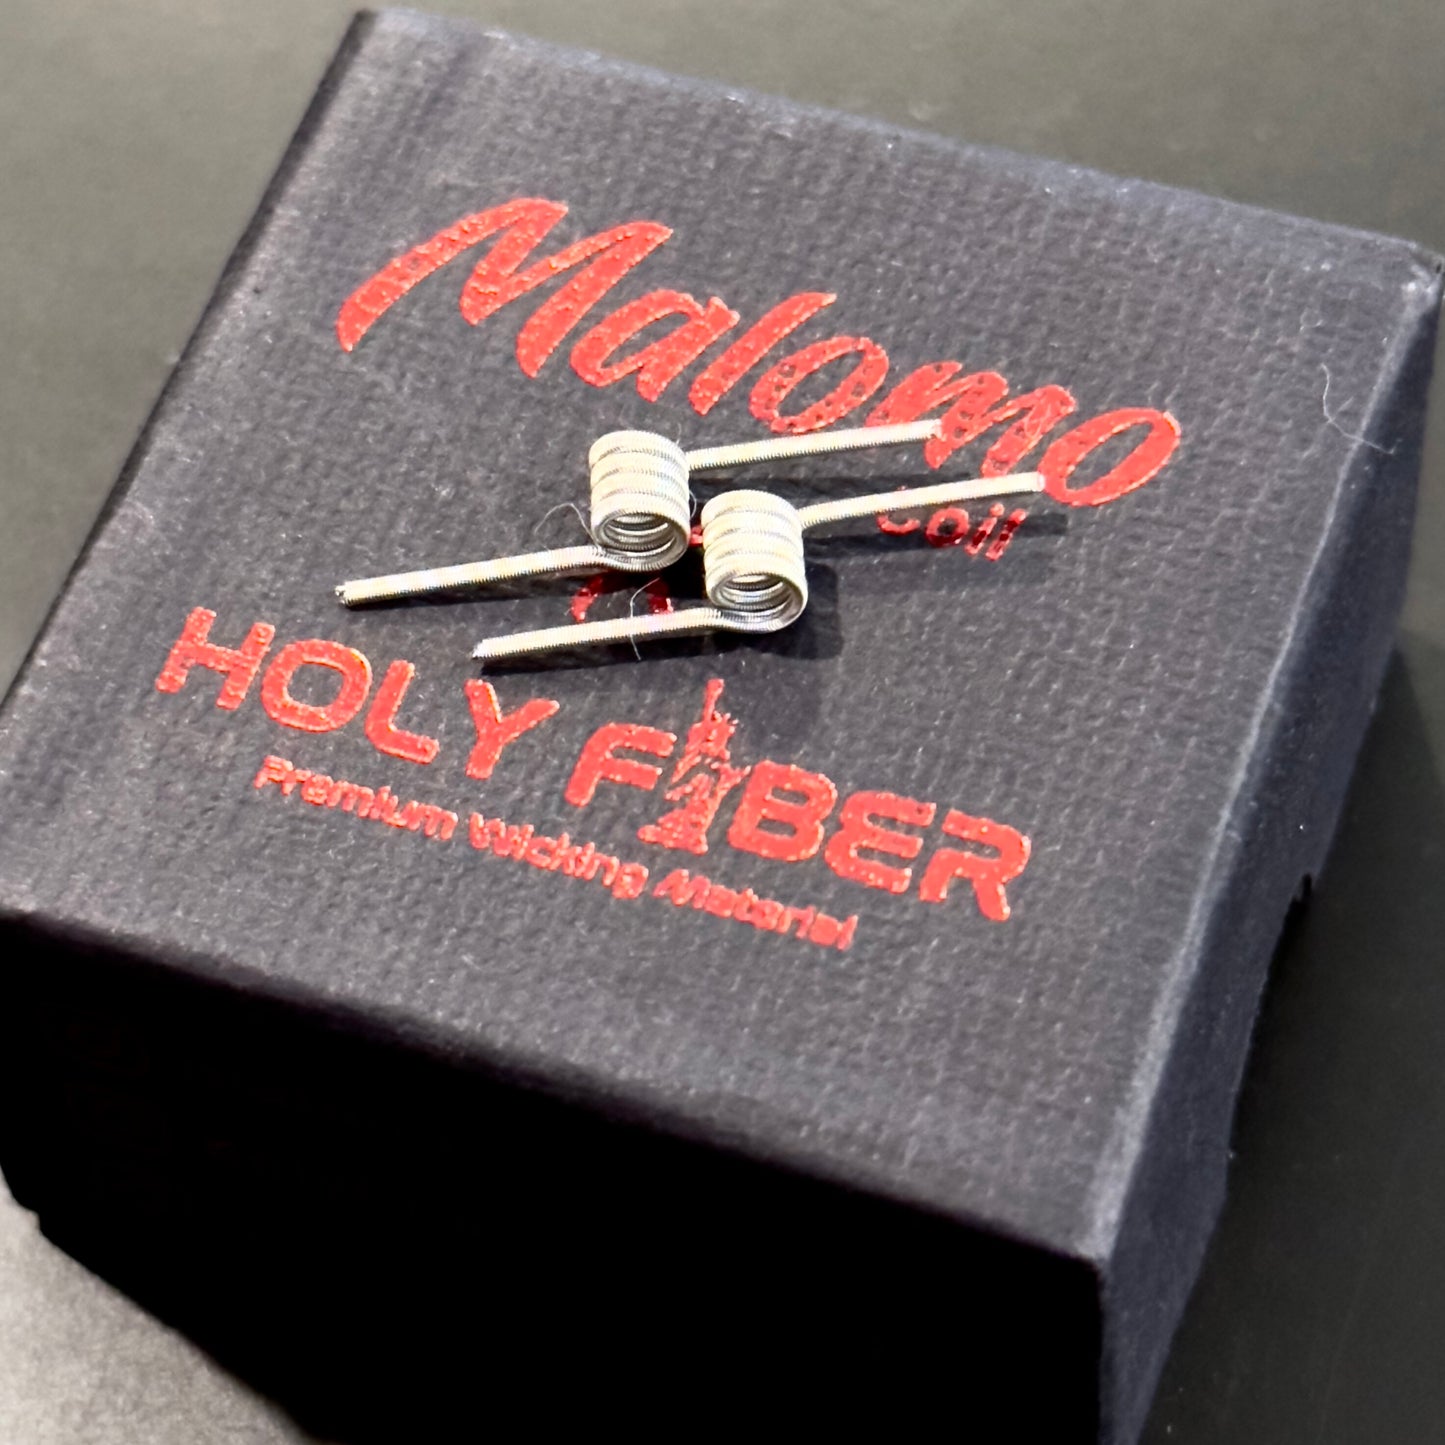 Malomo X Holy Fiber Prebuilt Coils (Made in Indon) Kropok Coil 